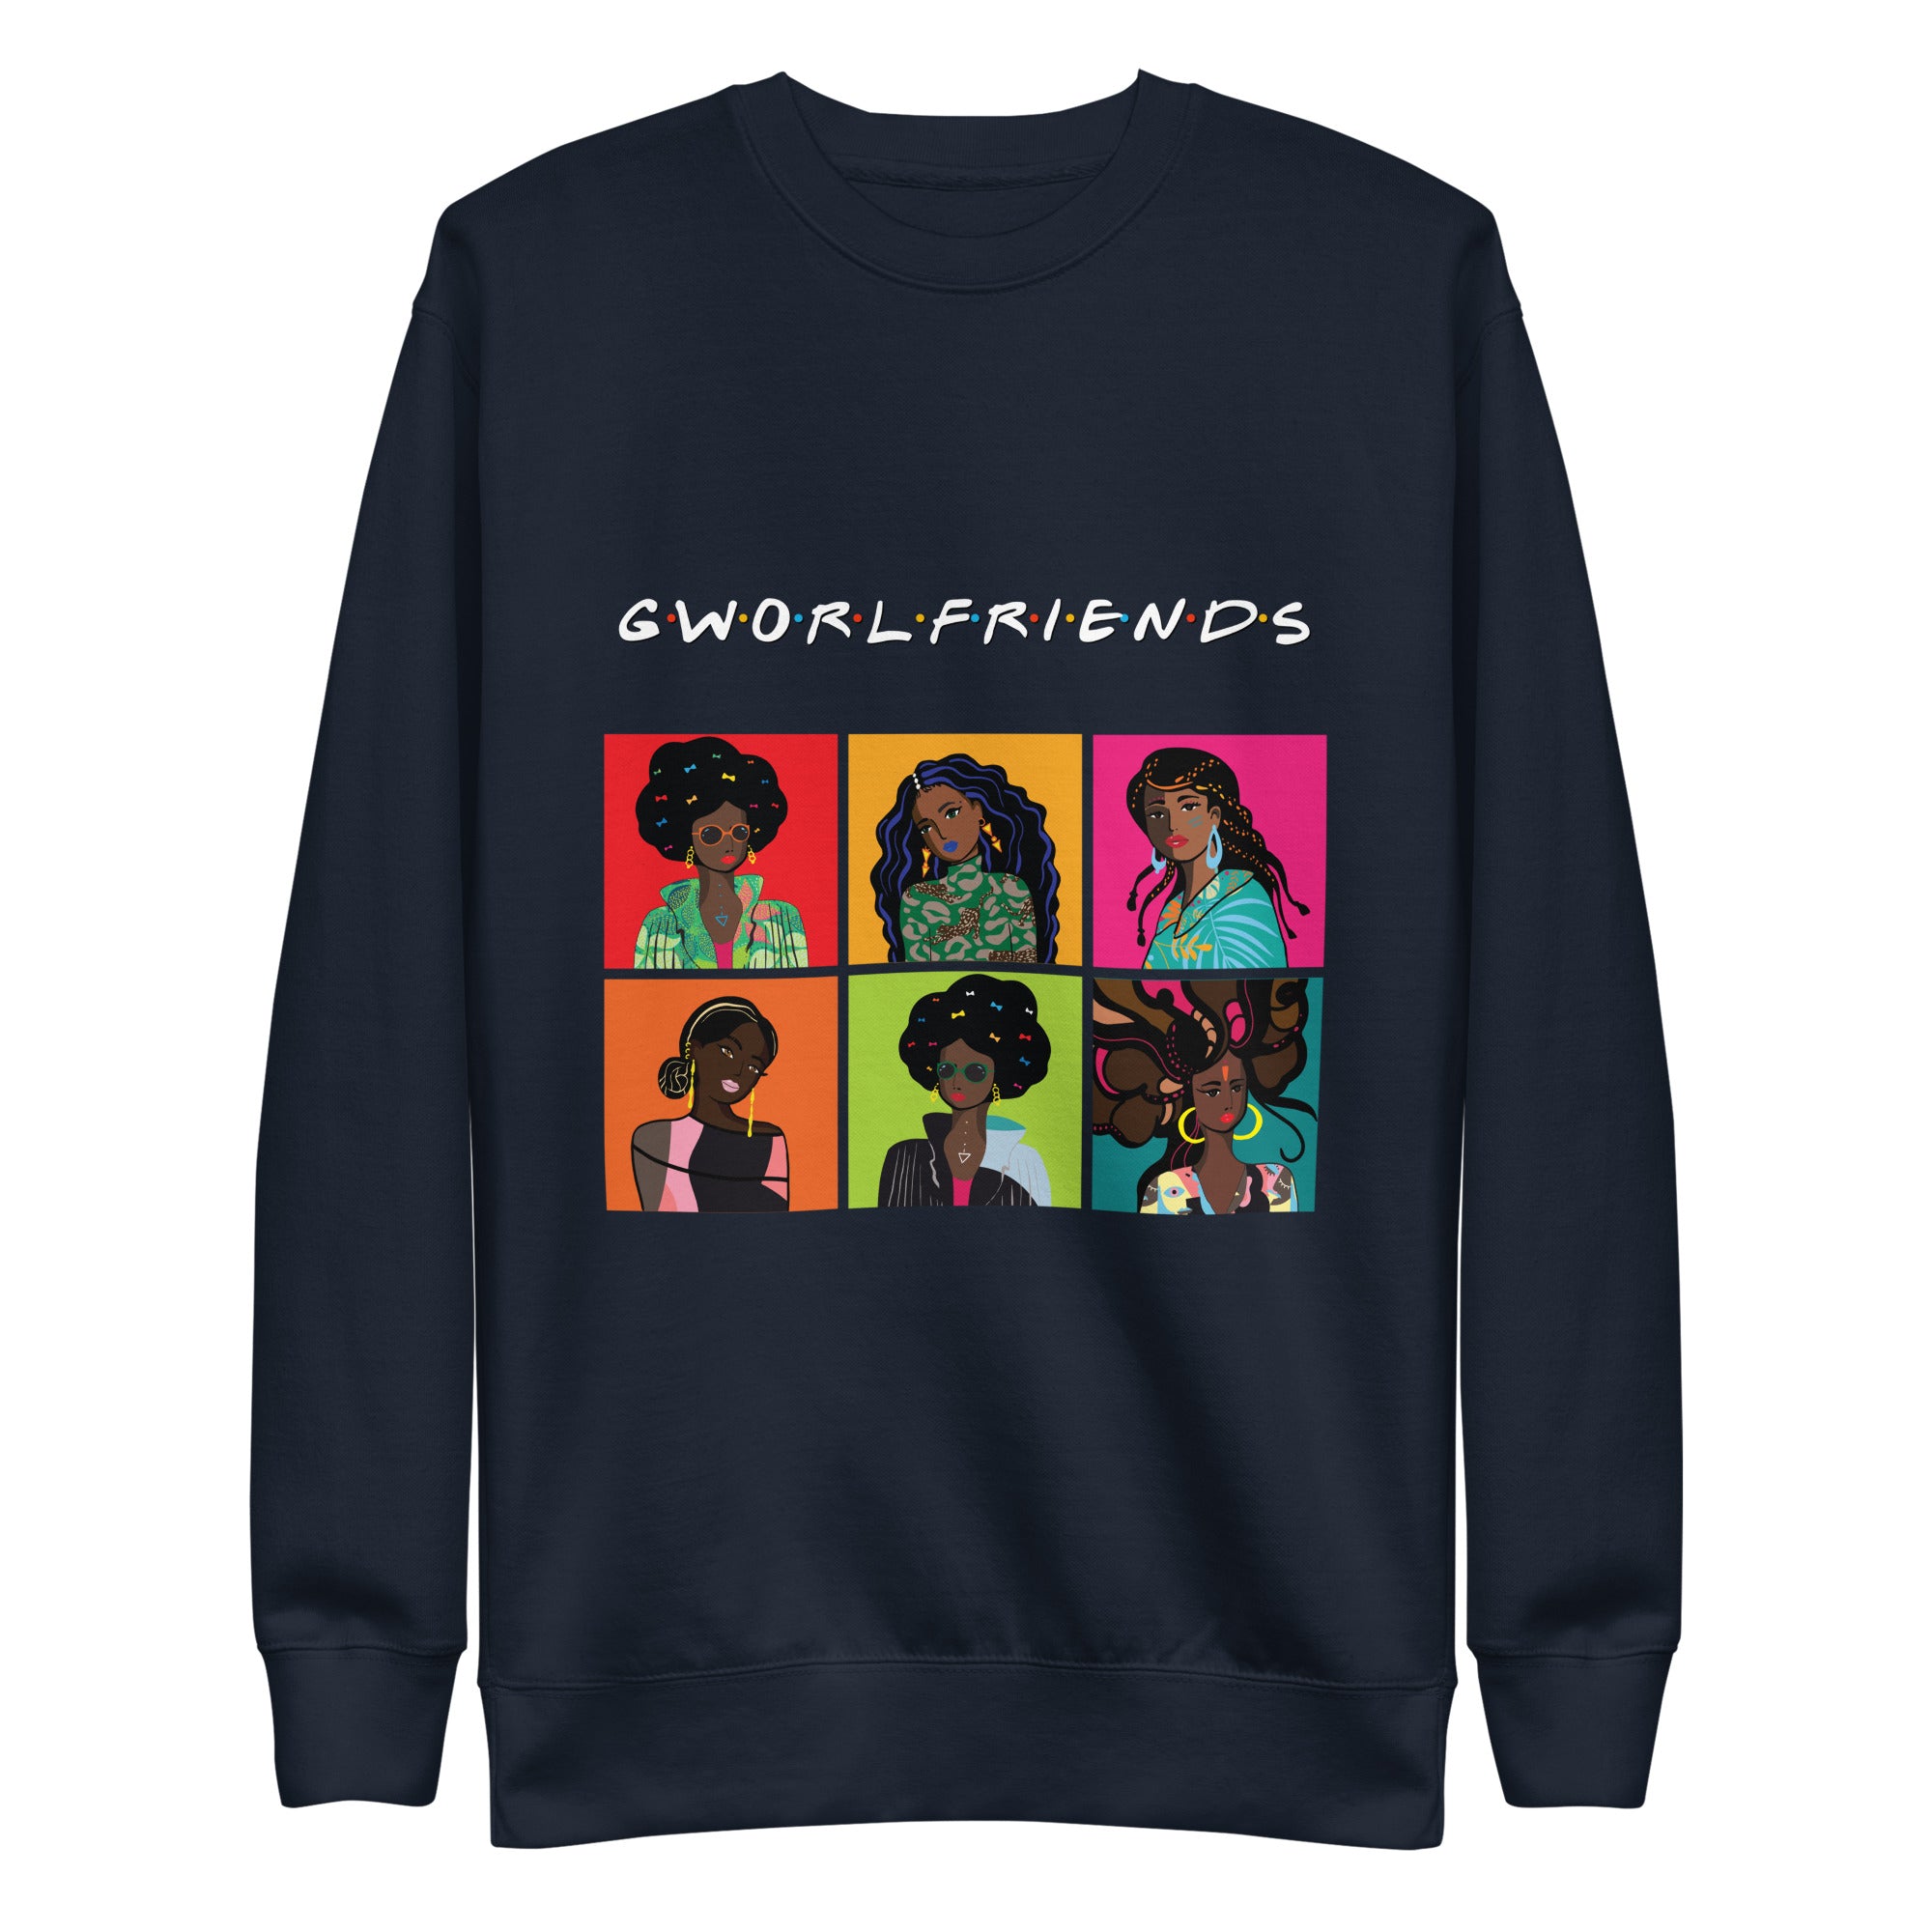 Gworlfriends Sweatshirt